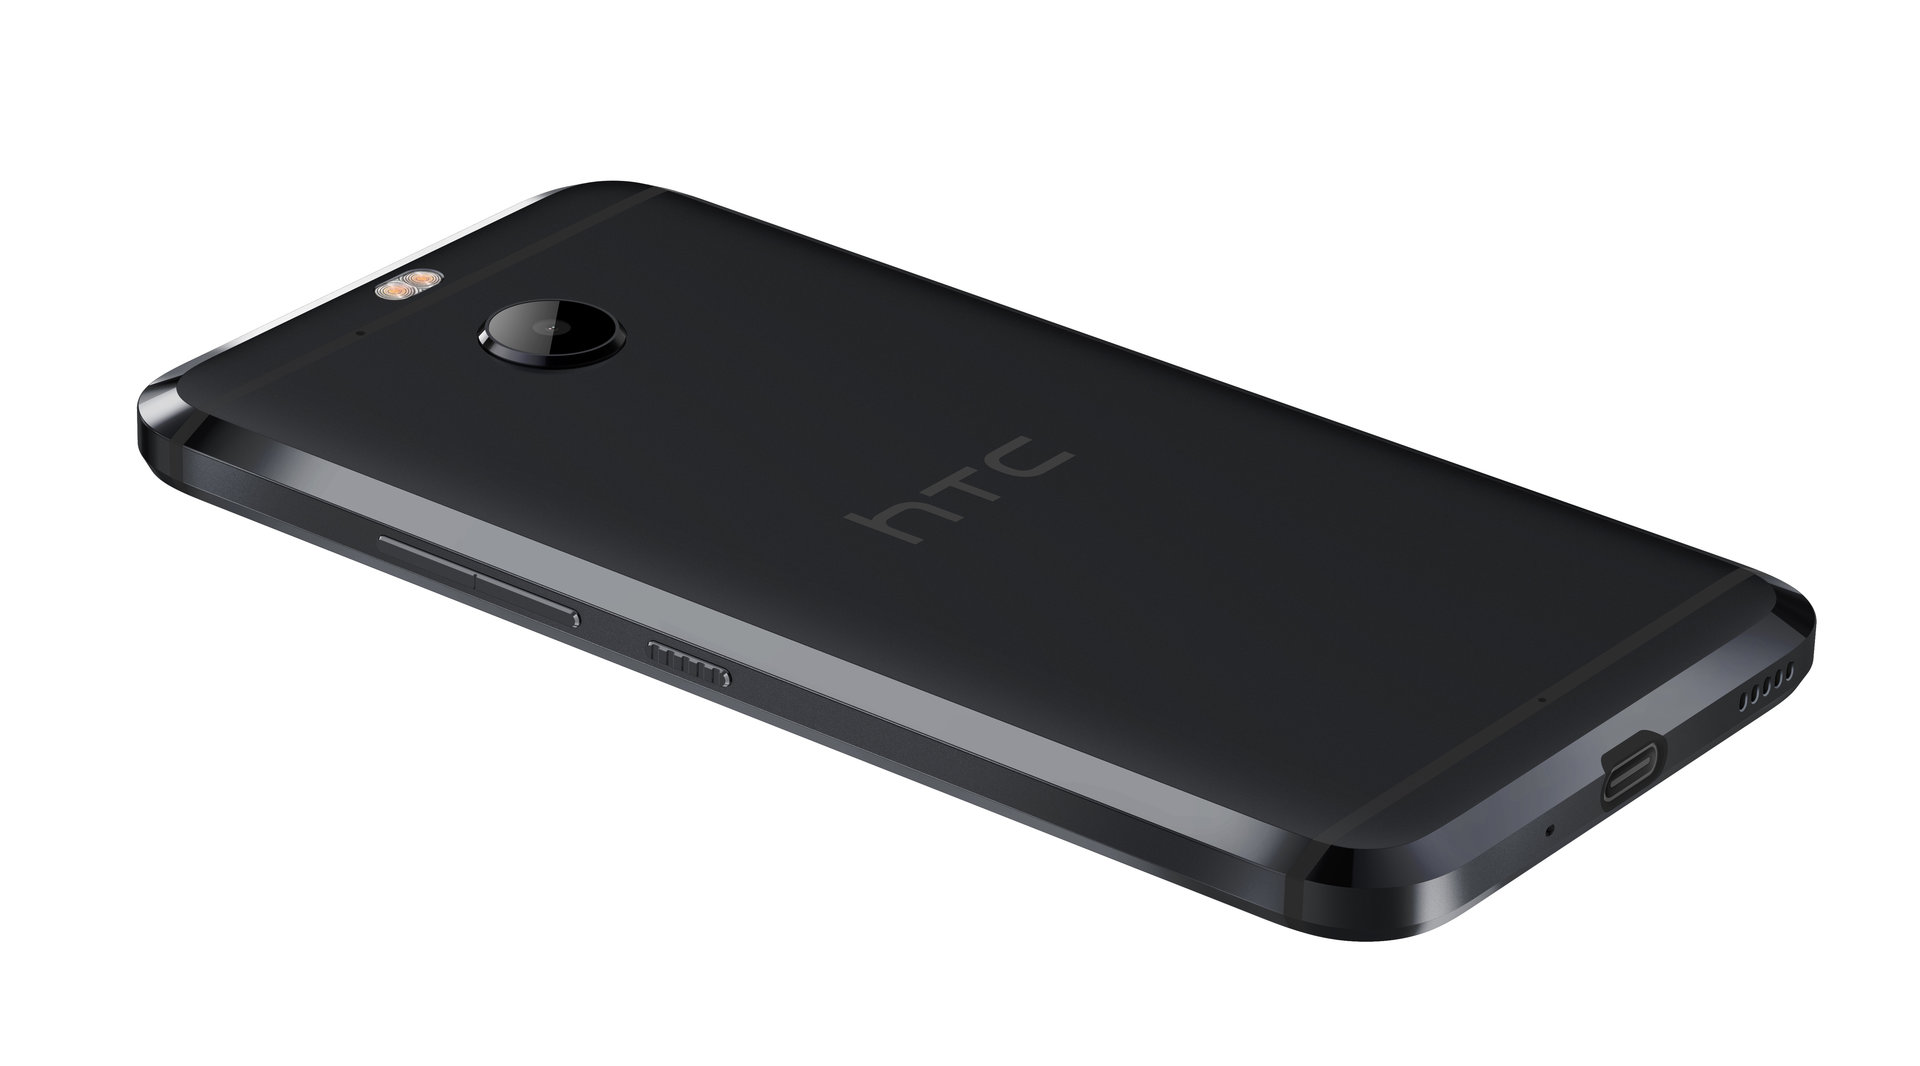 HTC 10 Evo